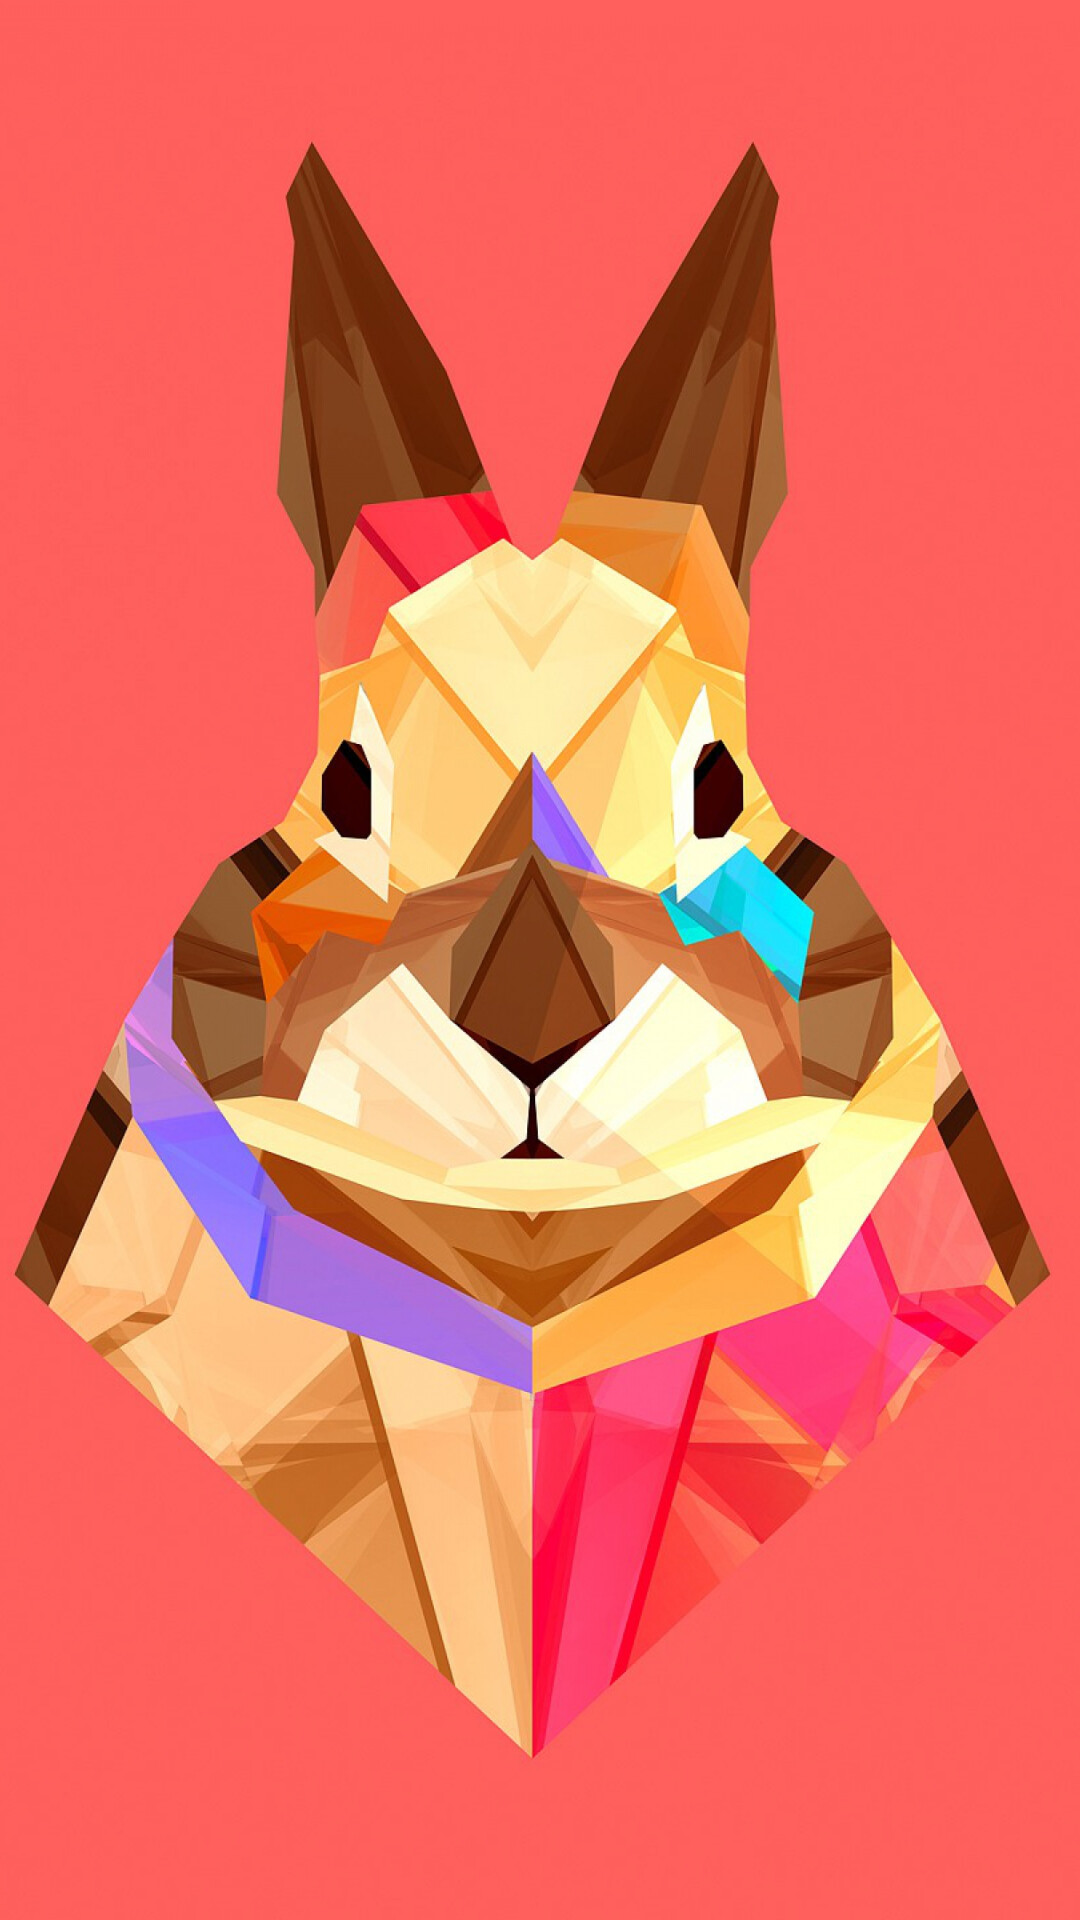 Rabbit: Small, furry mammals, Animal, Creative art. 1080x1920 Full HD Wallpaper.